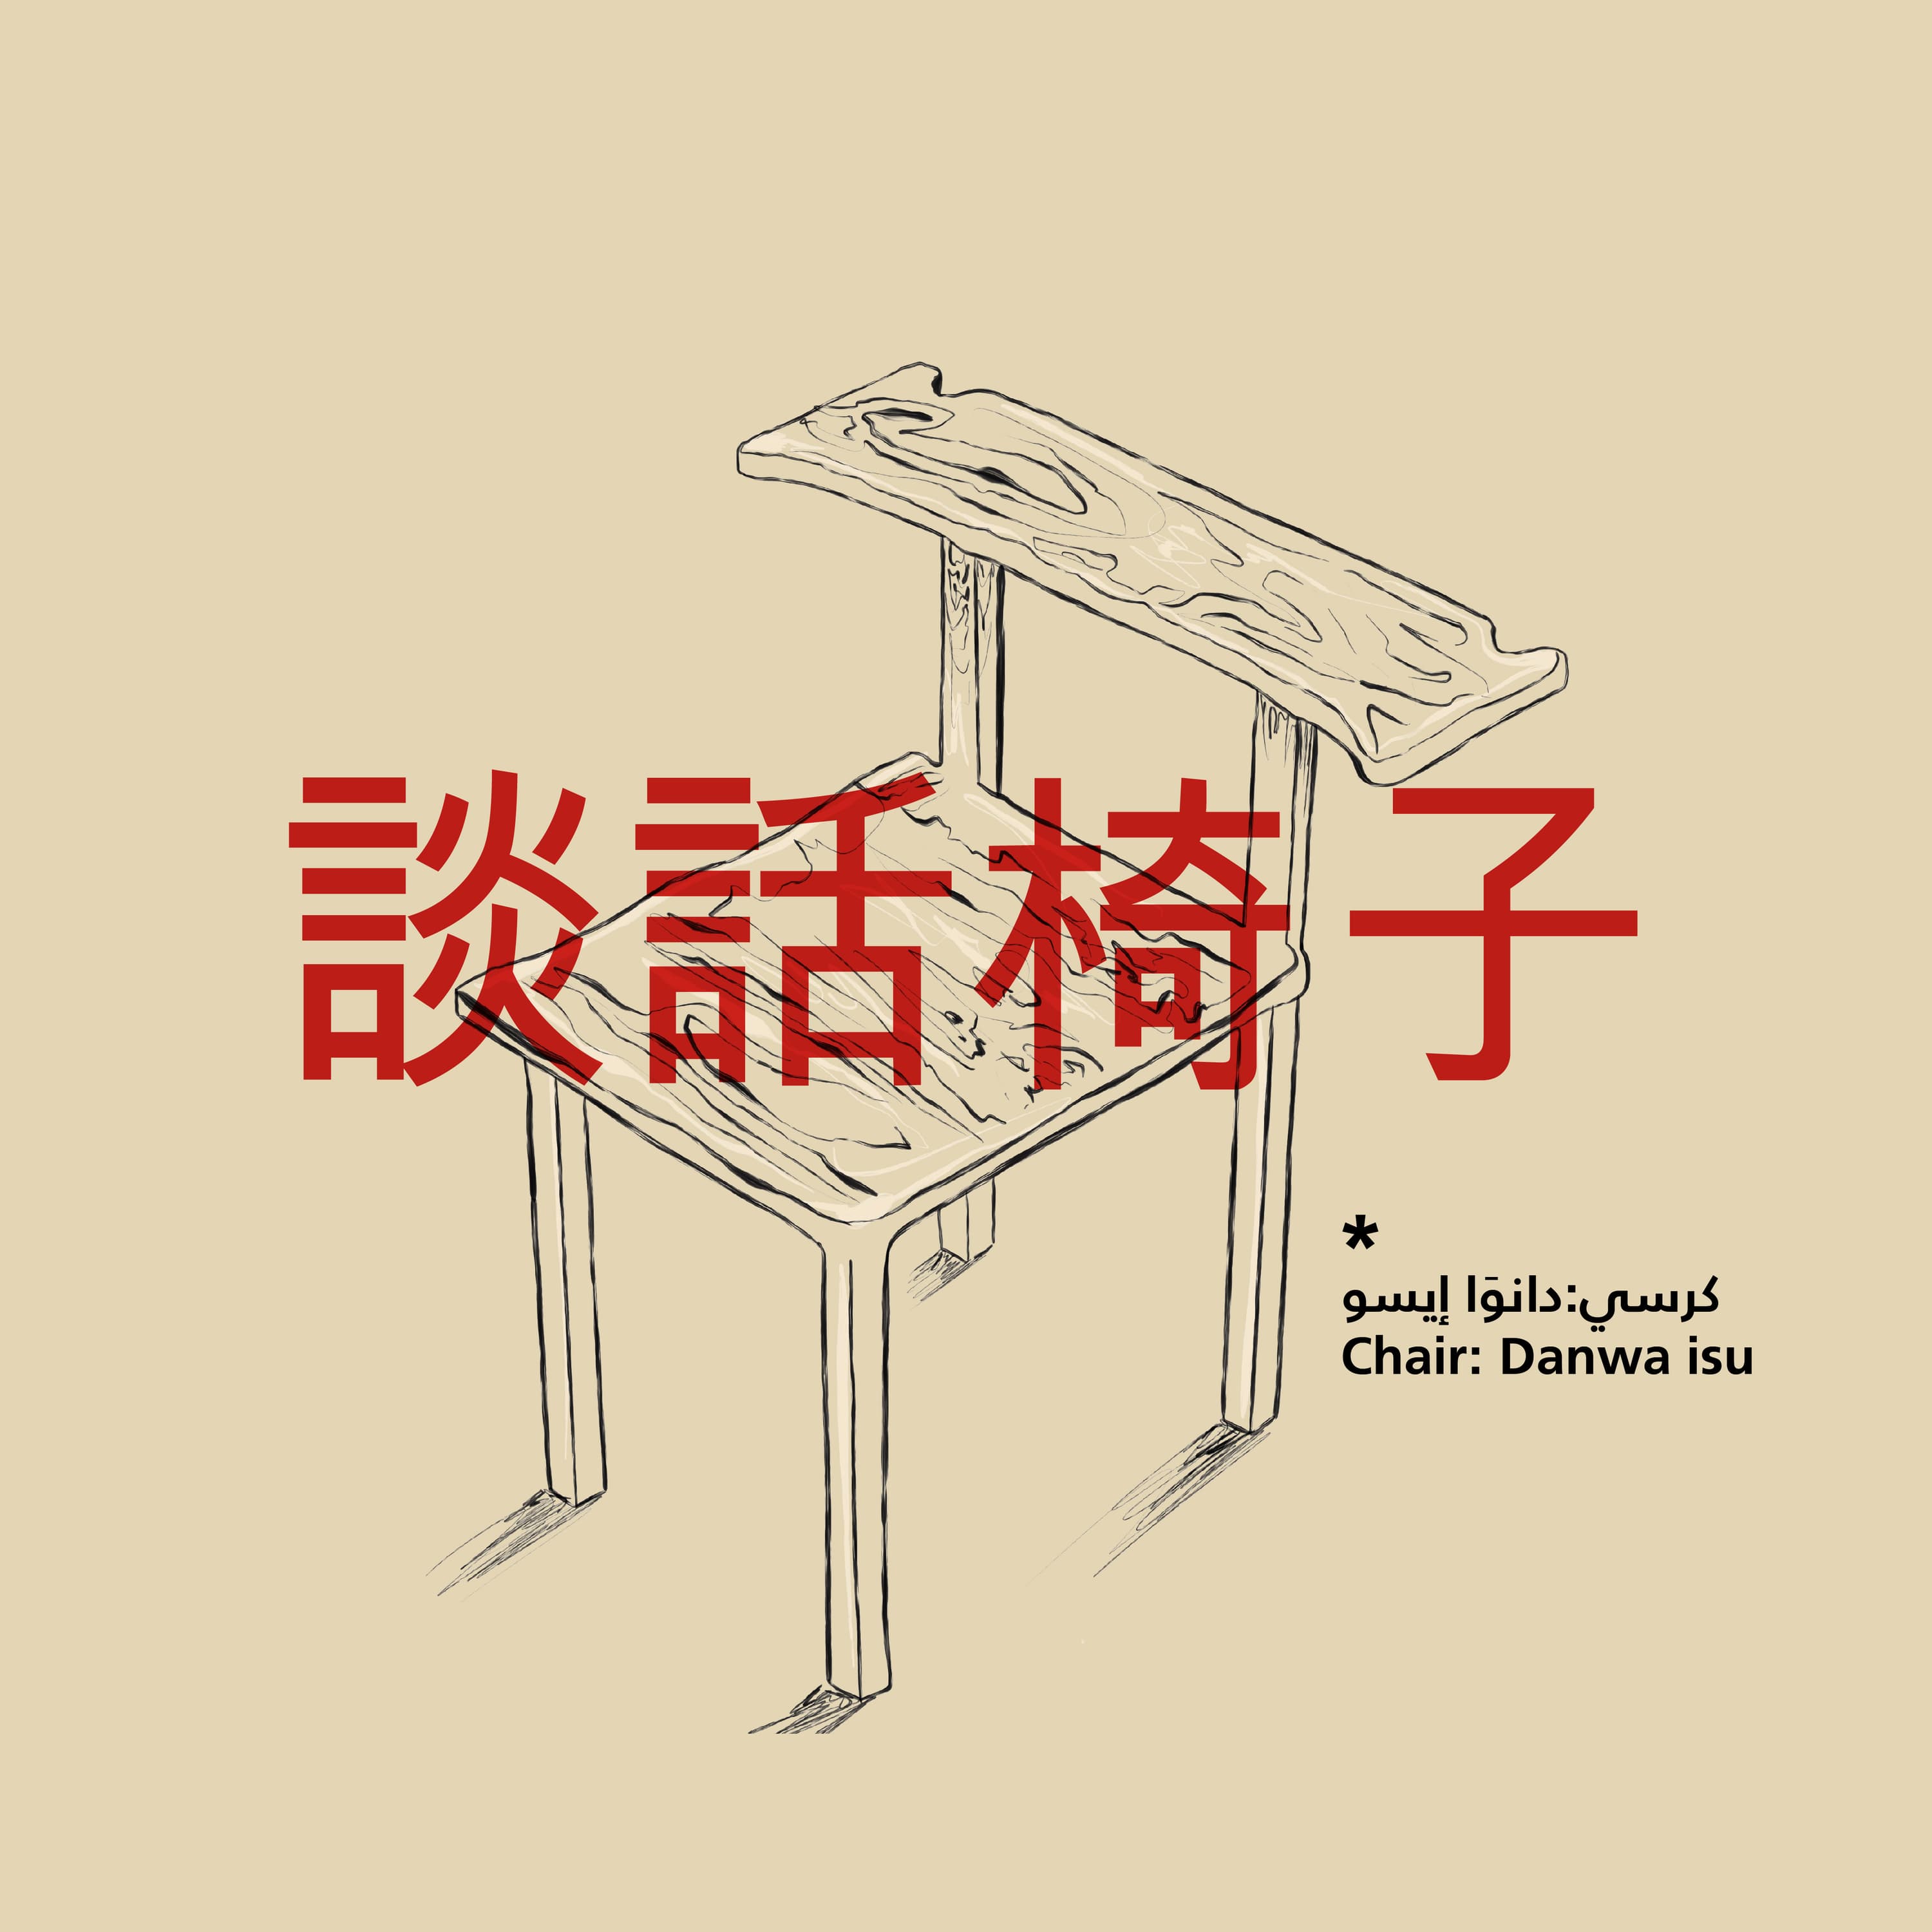 Japanese Woodwork: Danwa isu (談話椅子) – Chair